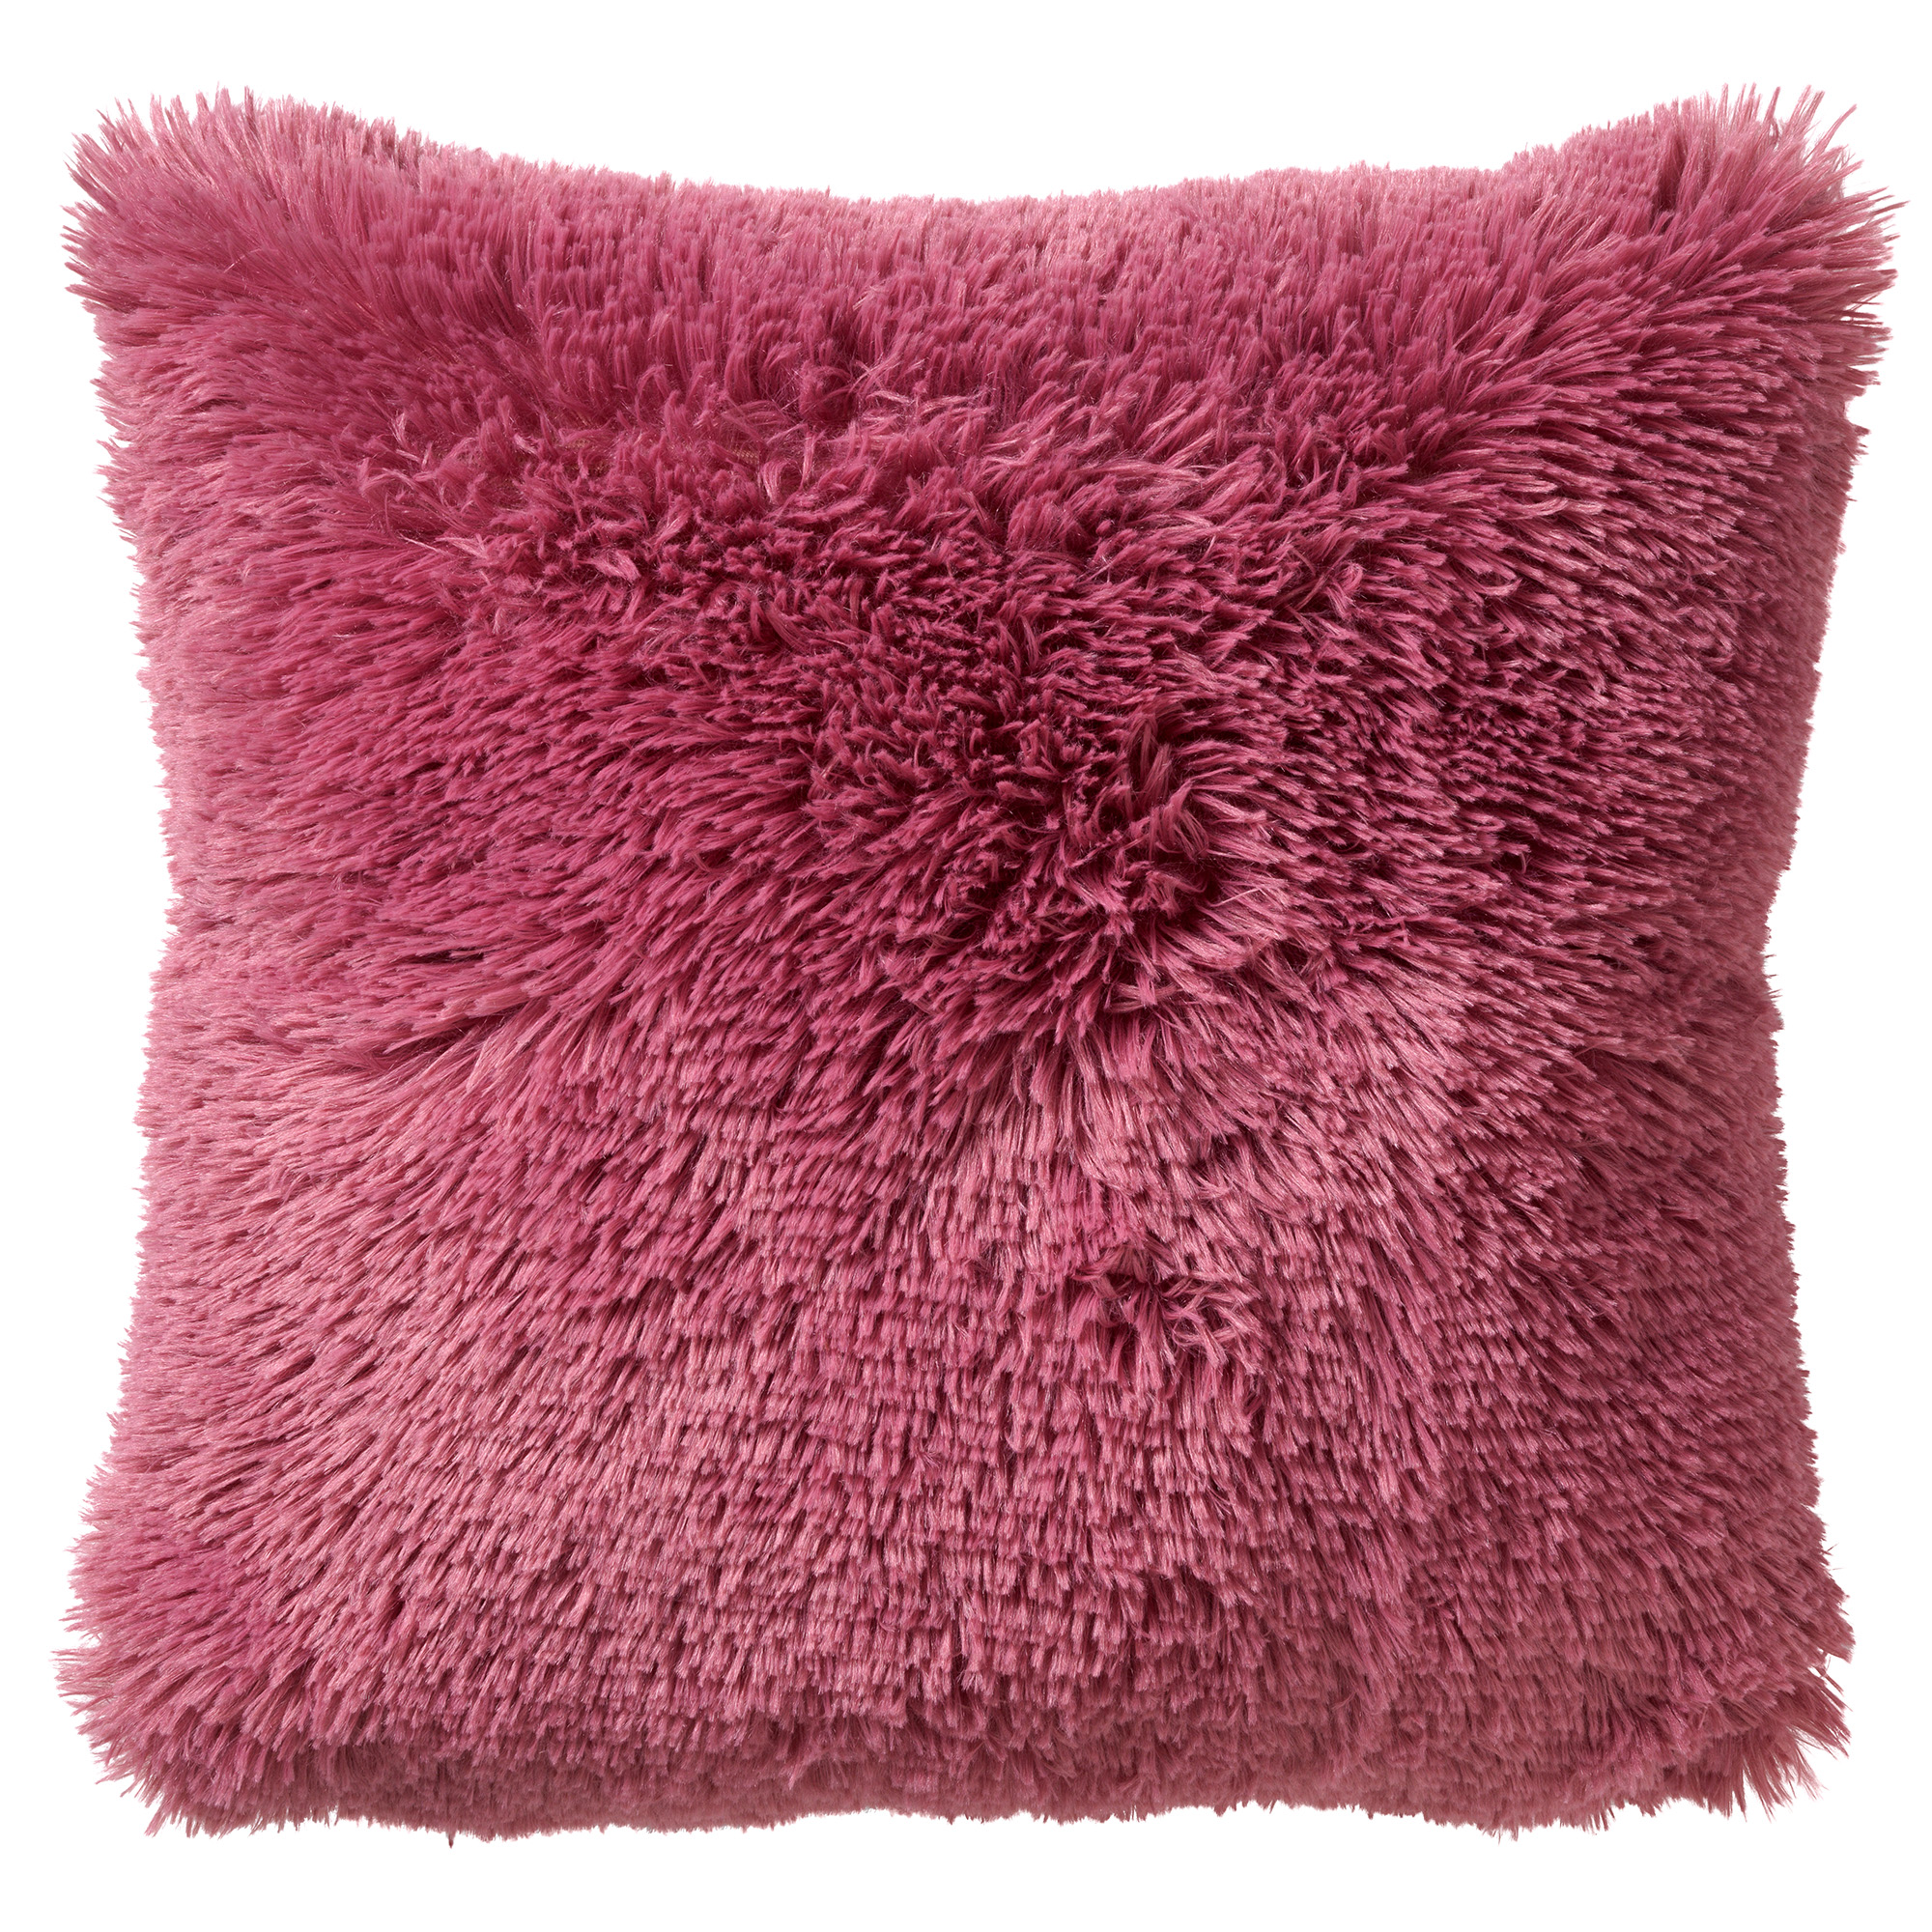 FLUFFY - Cushion 60x60 cm - Heather Rose - pink